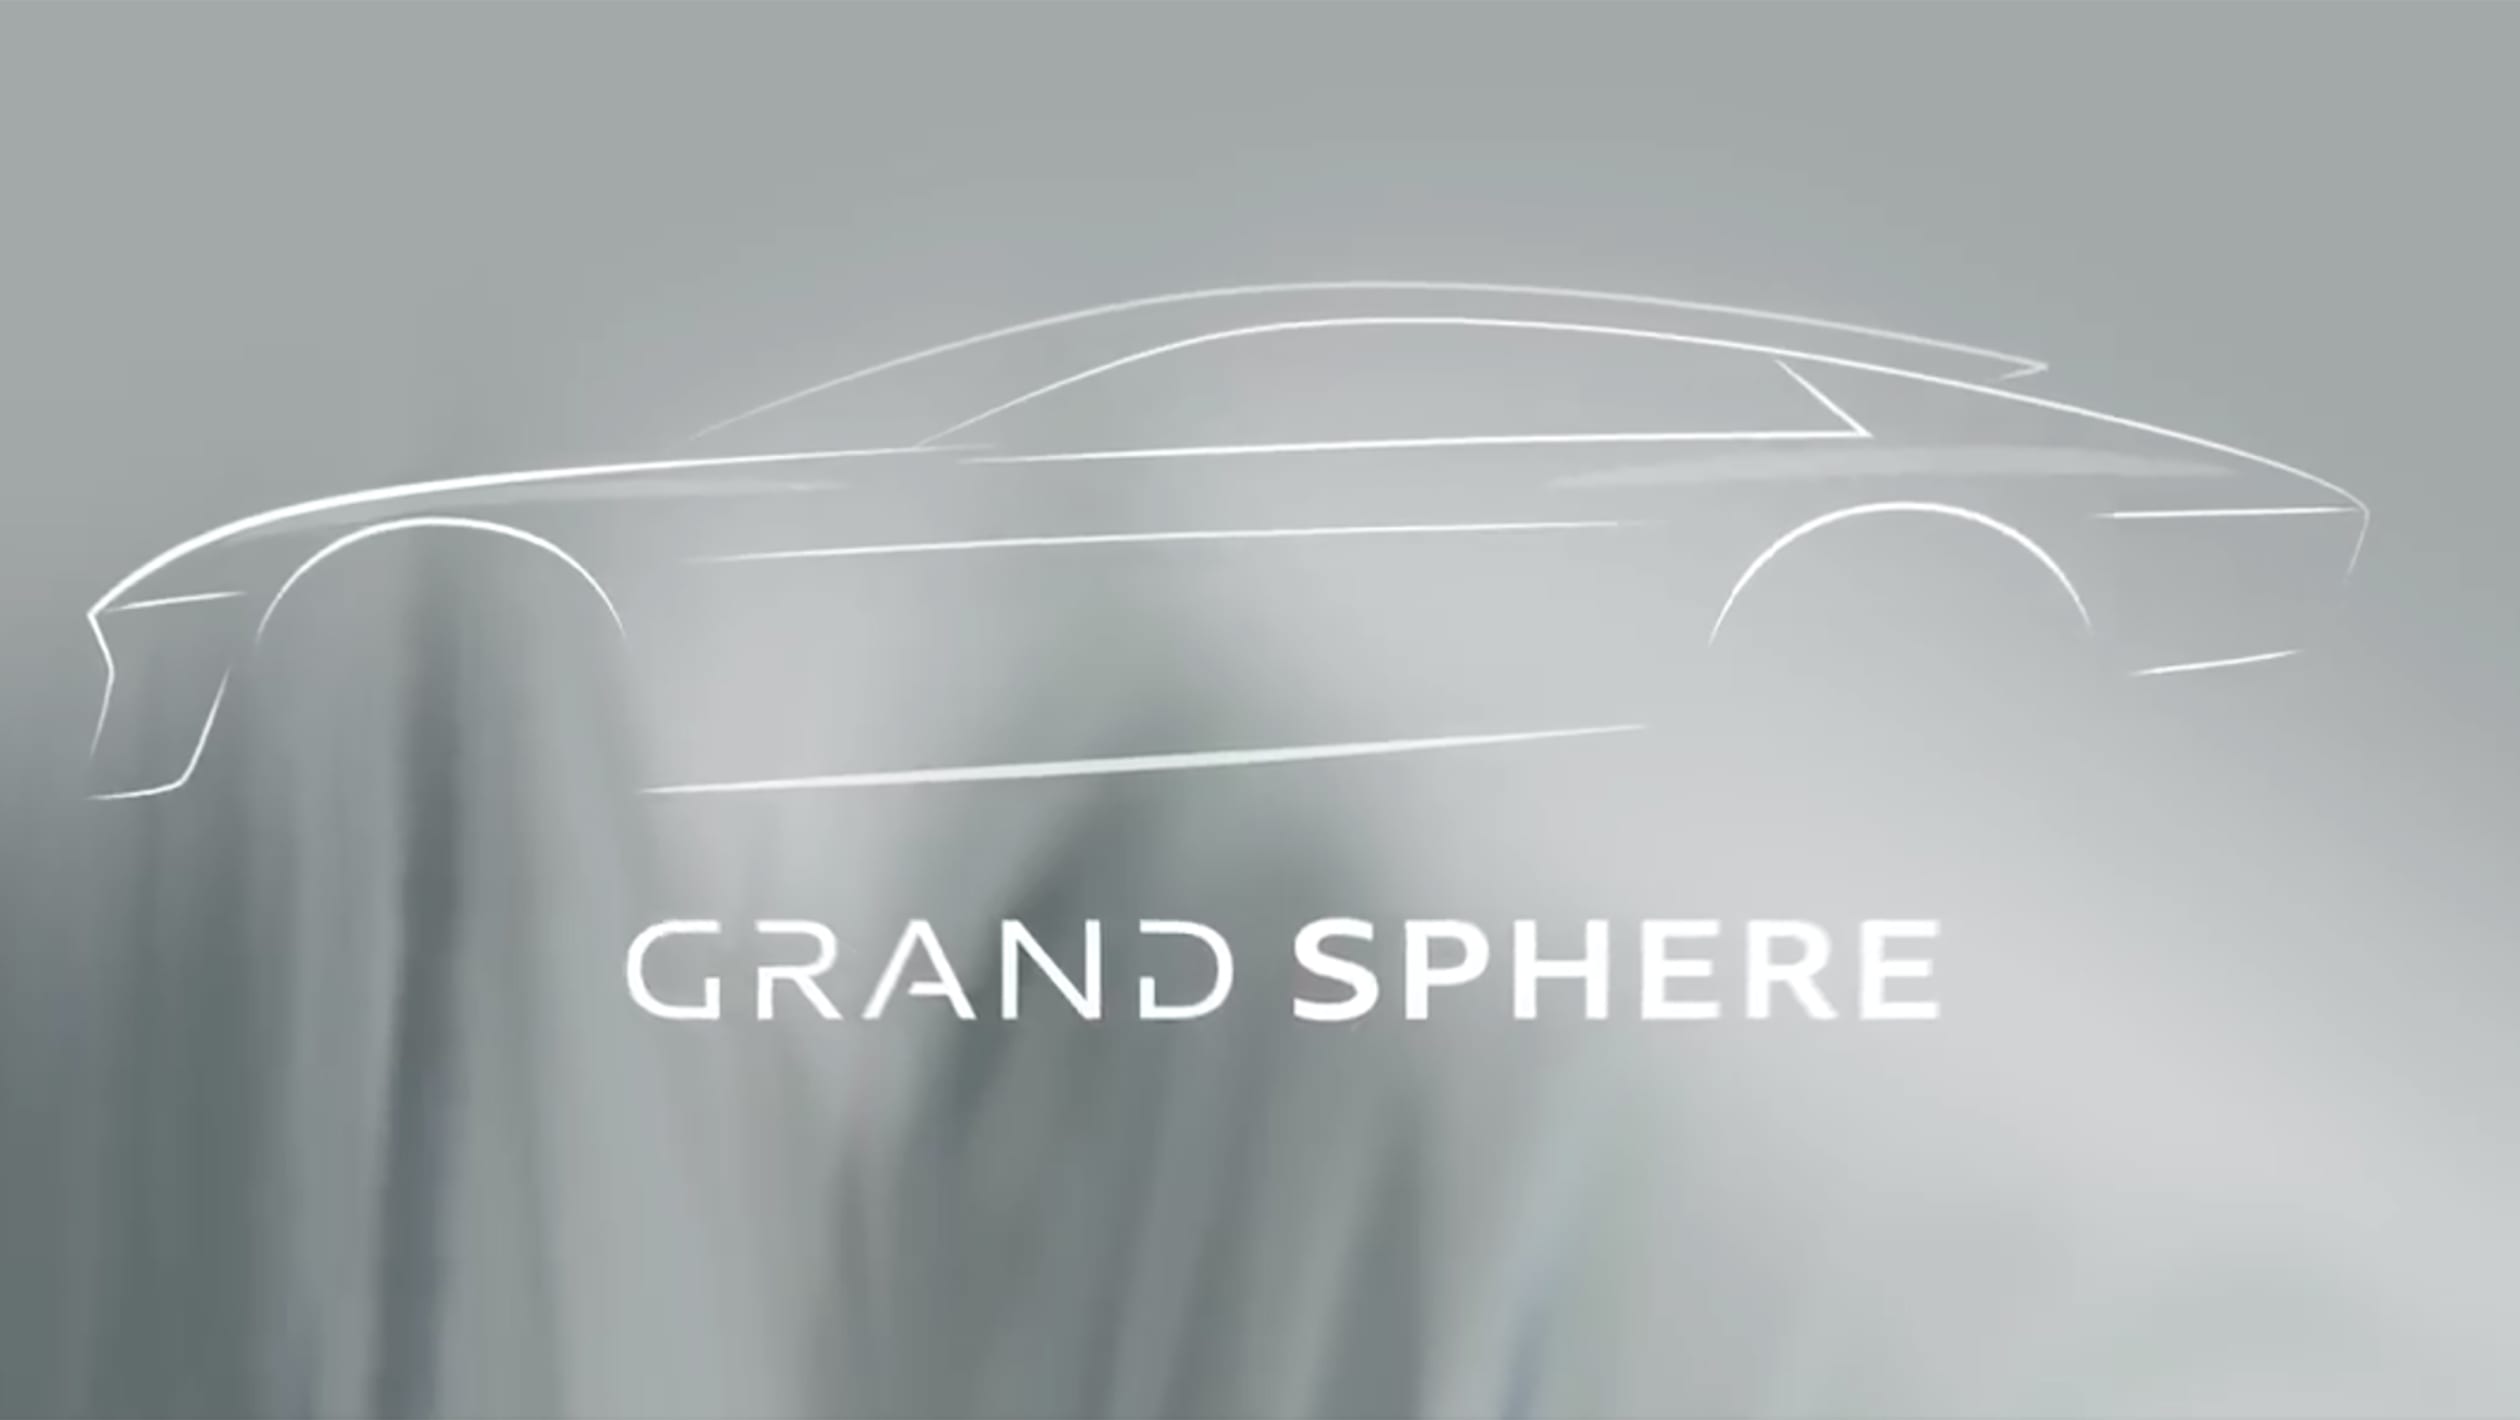 Audi Sphere concept car teaser images 5